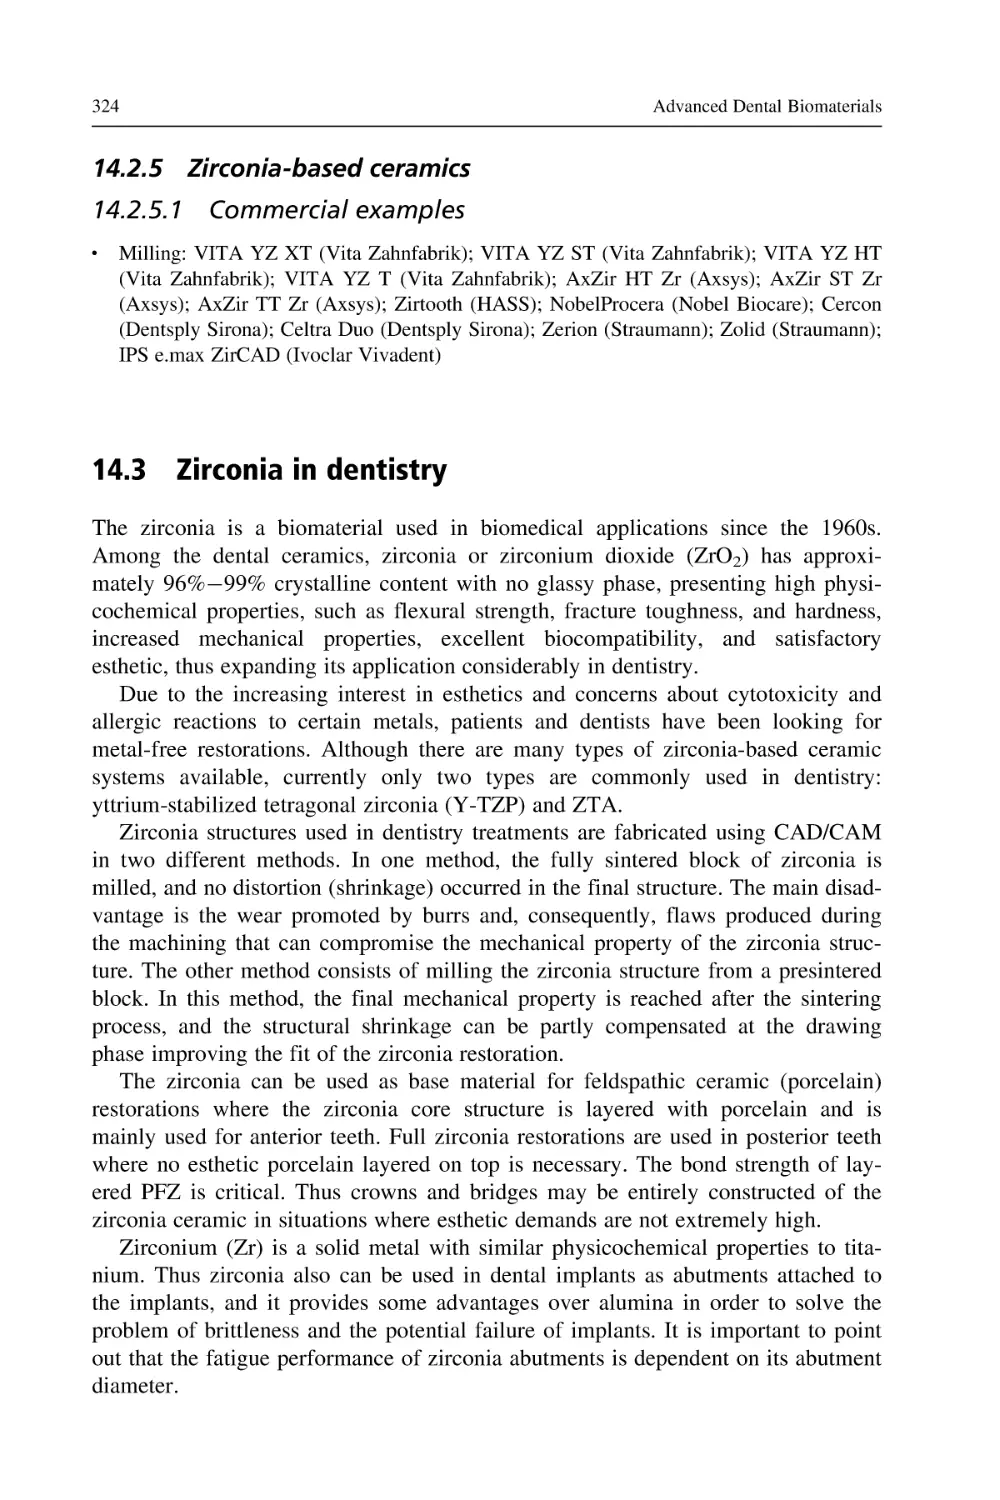 14.2.5 Zirconia-based ceramics
14.2.5.1 Commercial examples
14.3 Zirconia in dentistry